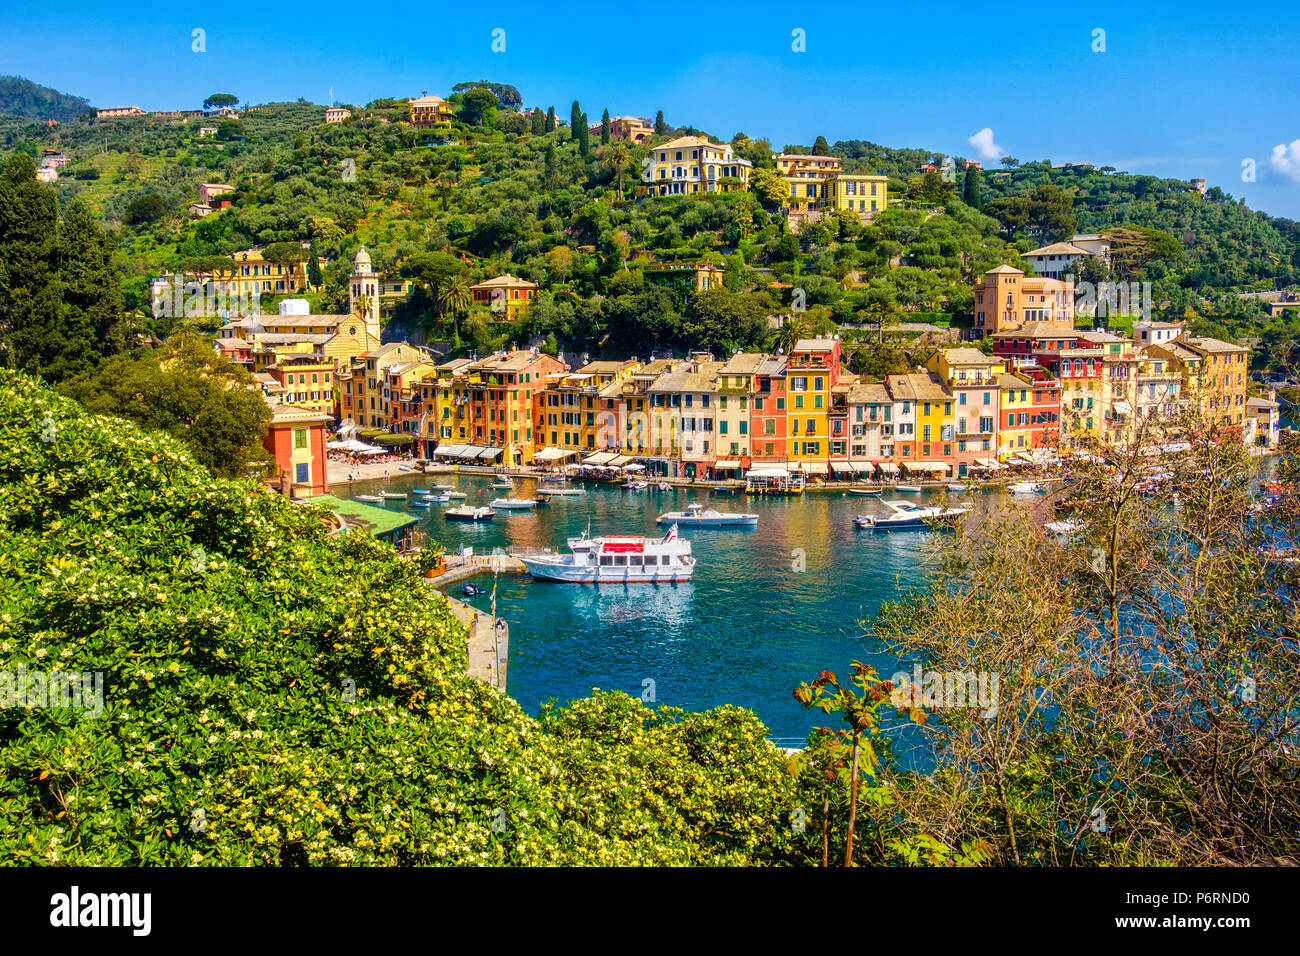 Portofino pintorescas casas vibrante colorido pueblo de Liguria - Génova - Italia Foto de stock